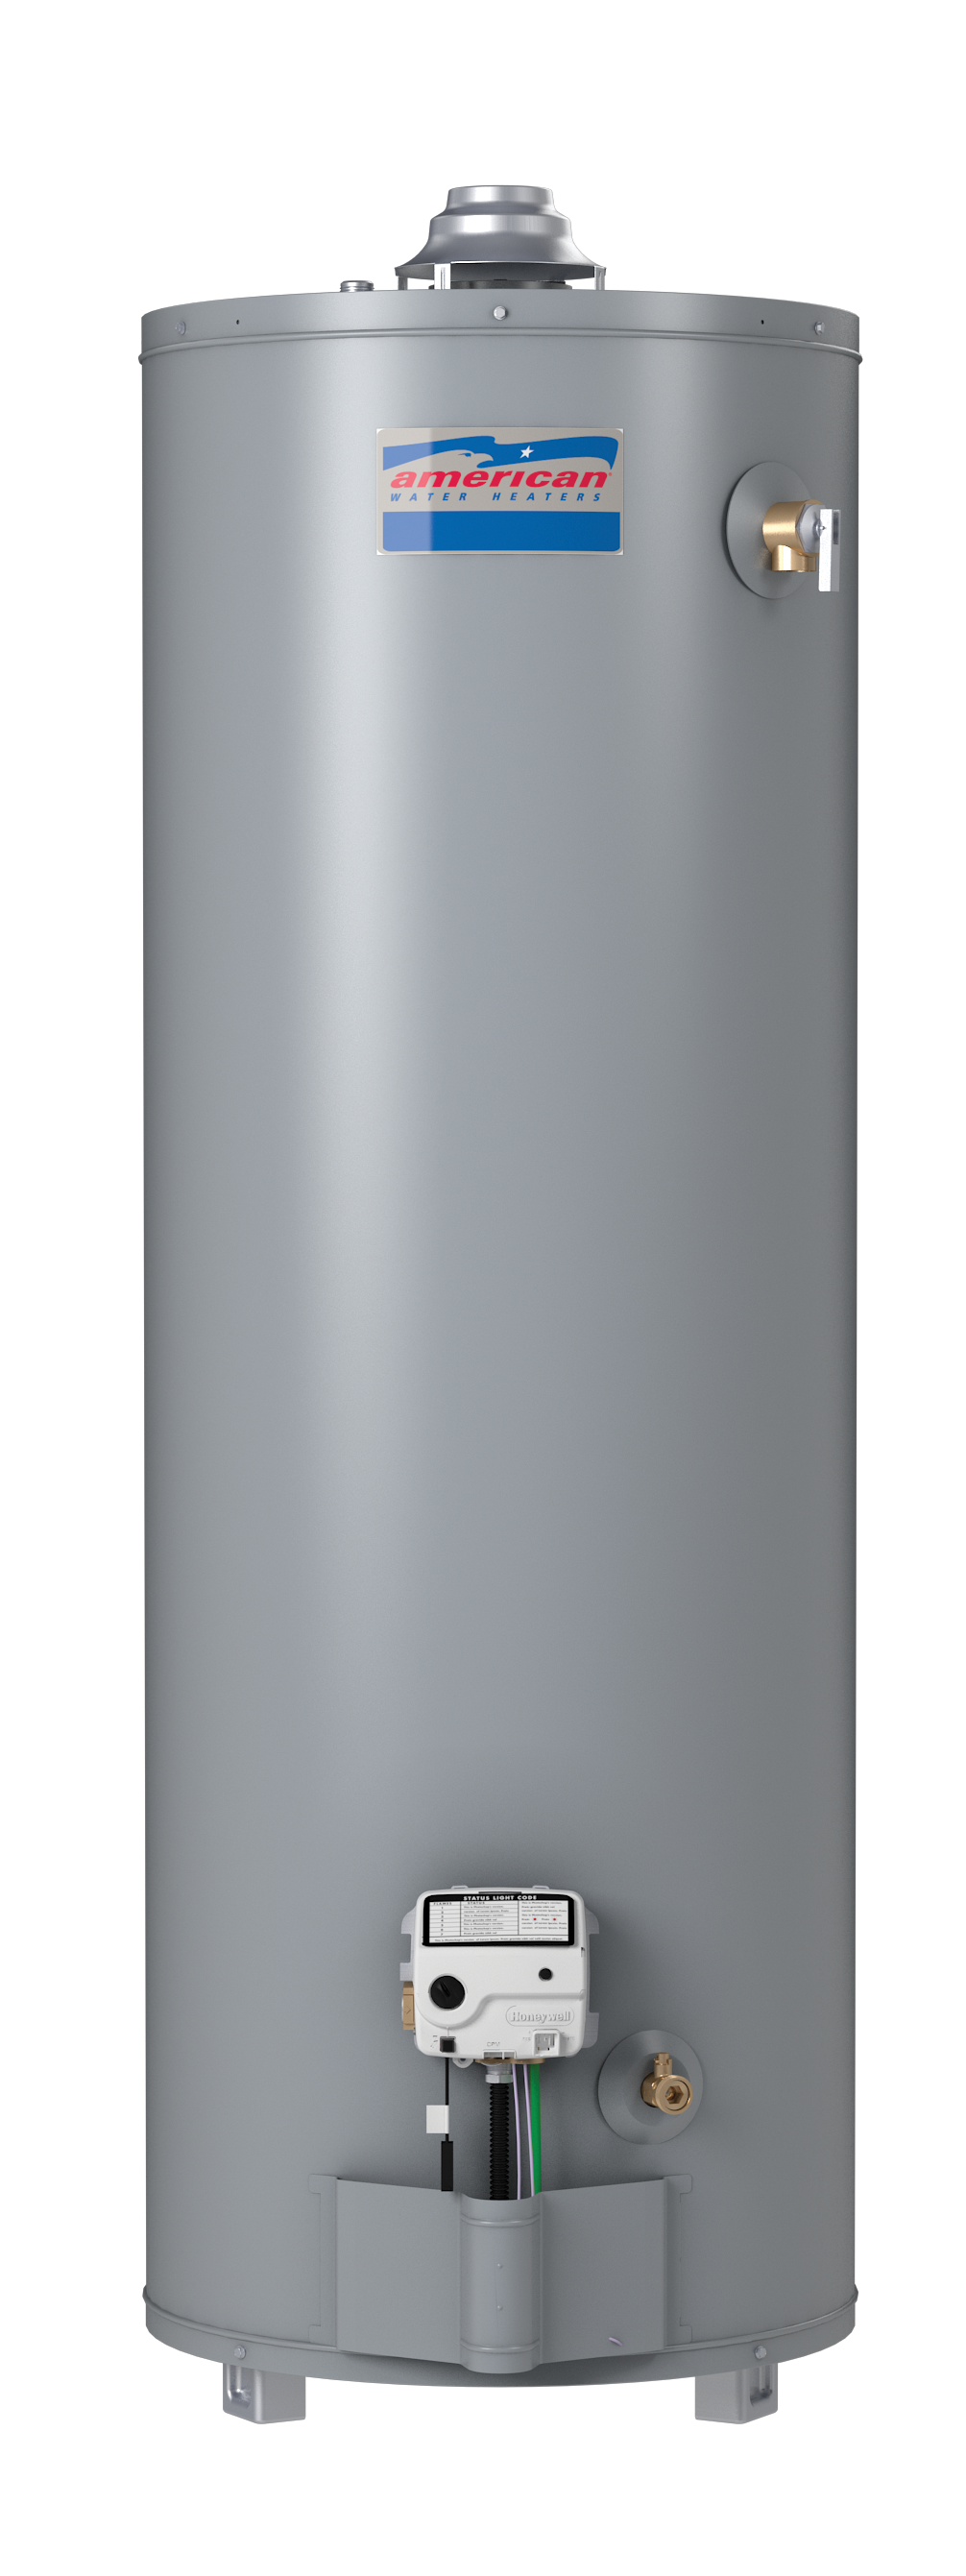 Автоматика водонагревателей. Газовый накопительный водонагреватель American Water Heater gx61-40t40-3nv. Бойлер Mor Flo gx61-40t40-3nv. Газовый бойлер Mor-Flo g61-50t40-3nv. Бойлер Mor Flo 284 л газовый.